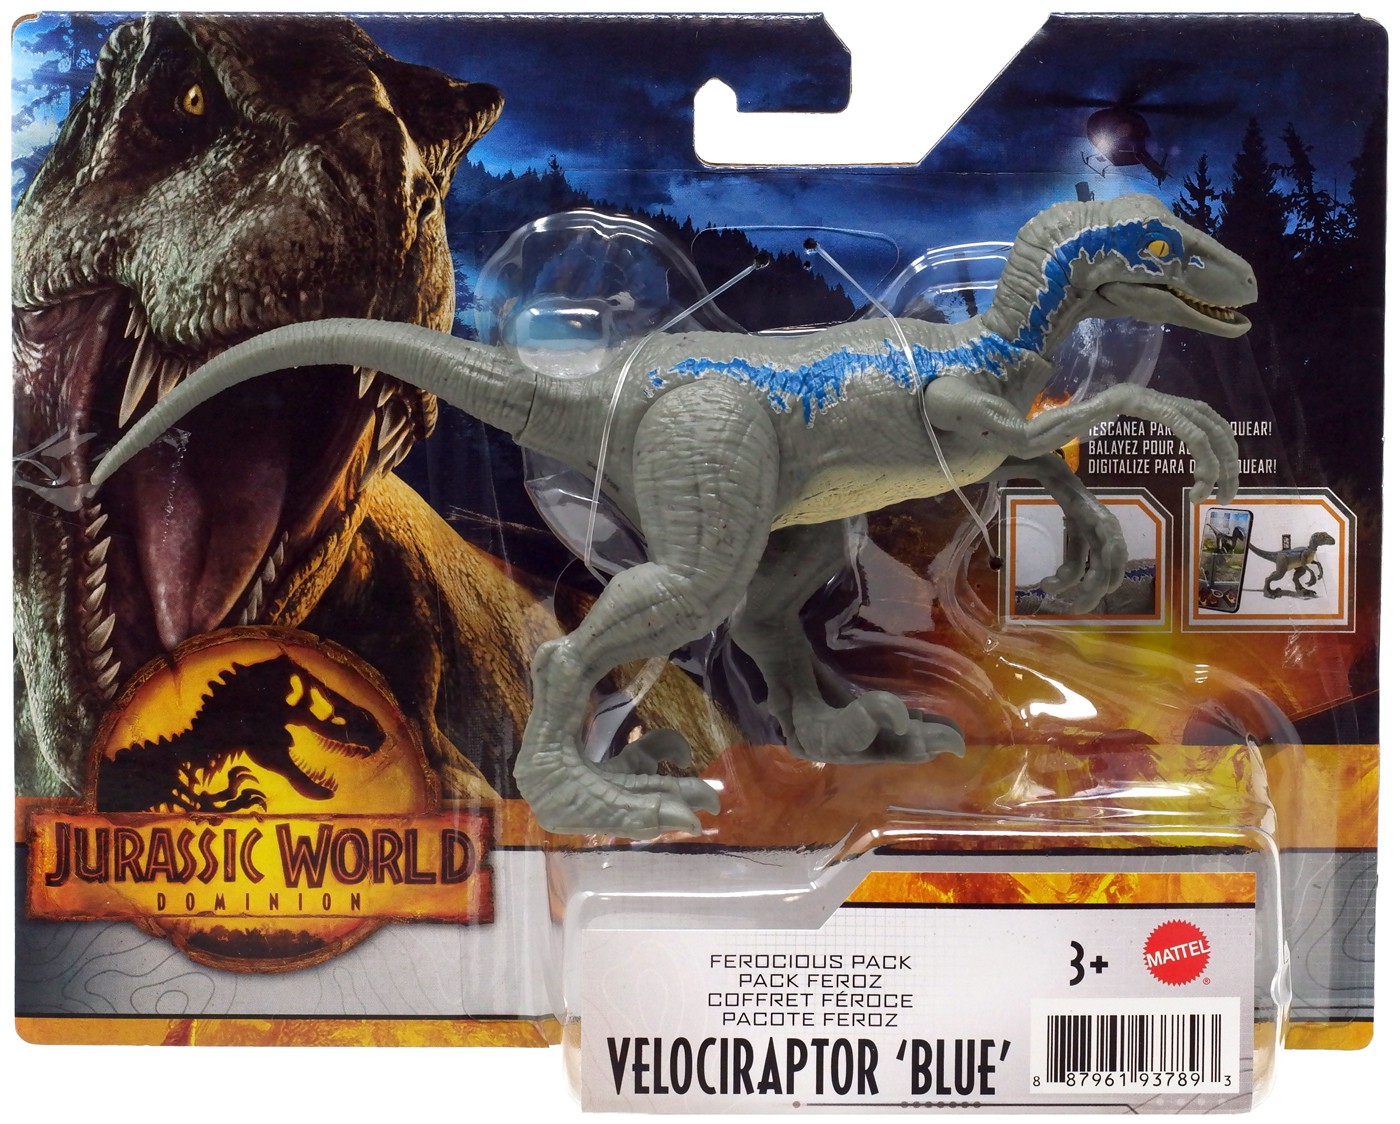 Jurassic World Dominion Velociraptor 'Blue' Ferocious Pack | eBay